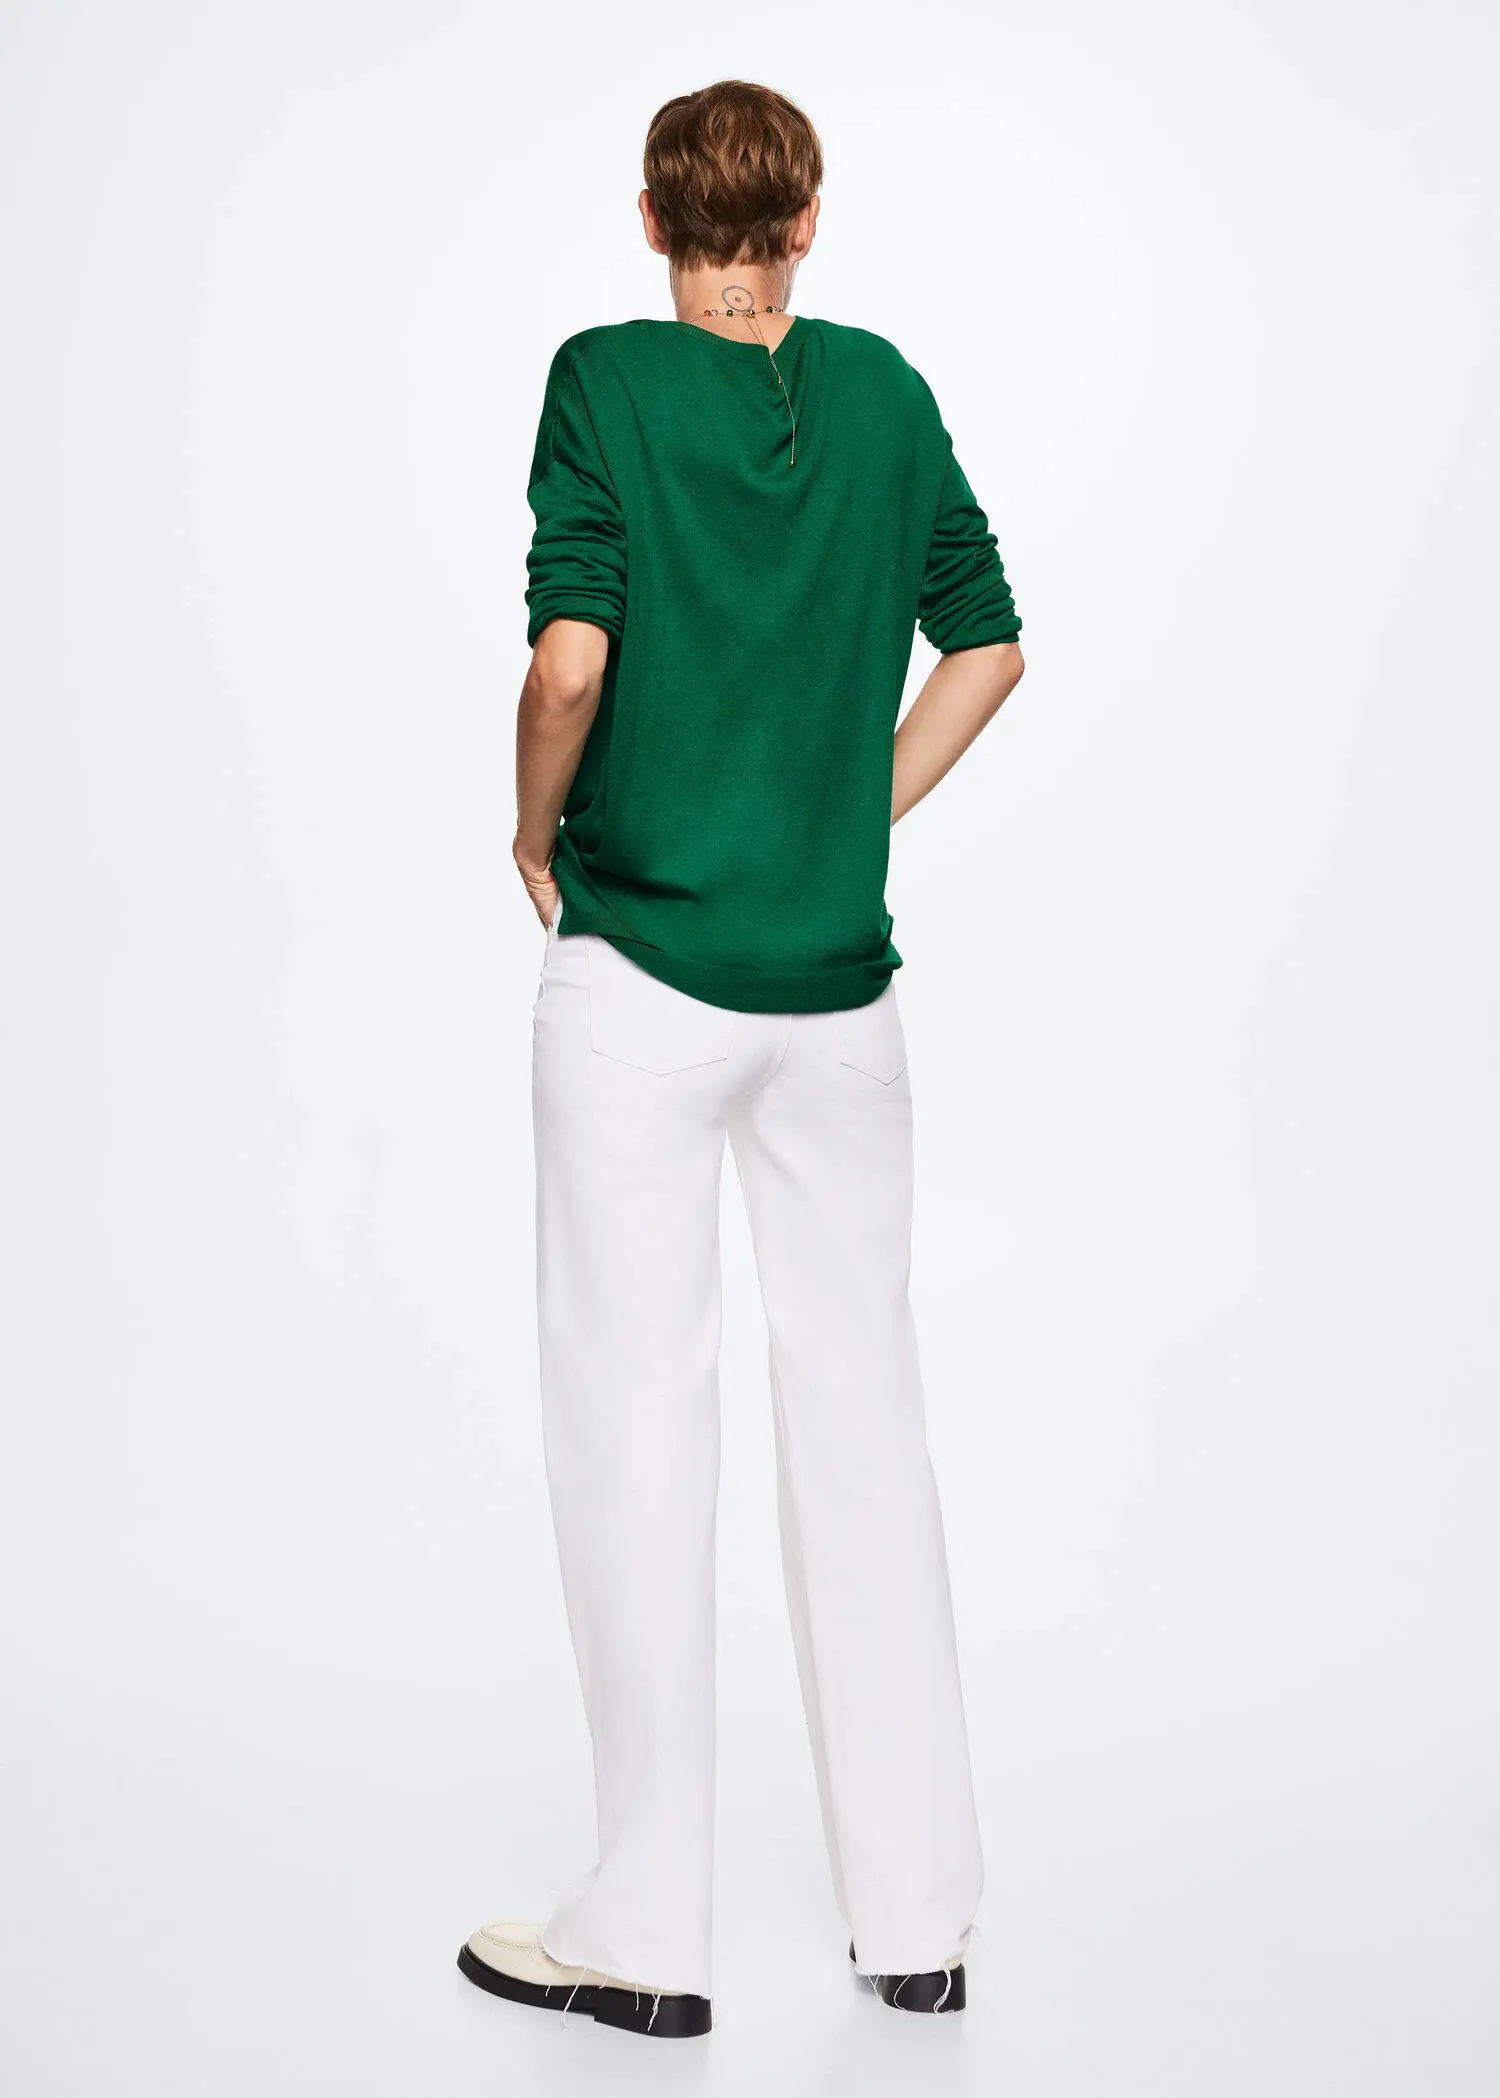 Mango V-neck knit sweater. a woman wearing a green shirt and white pants. 